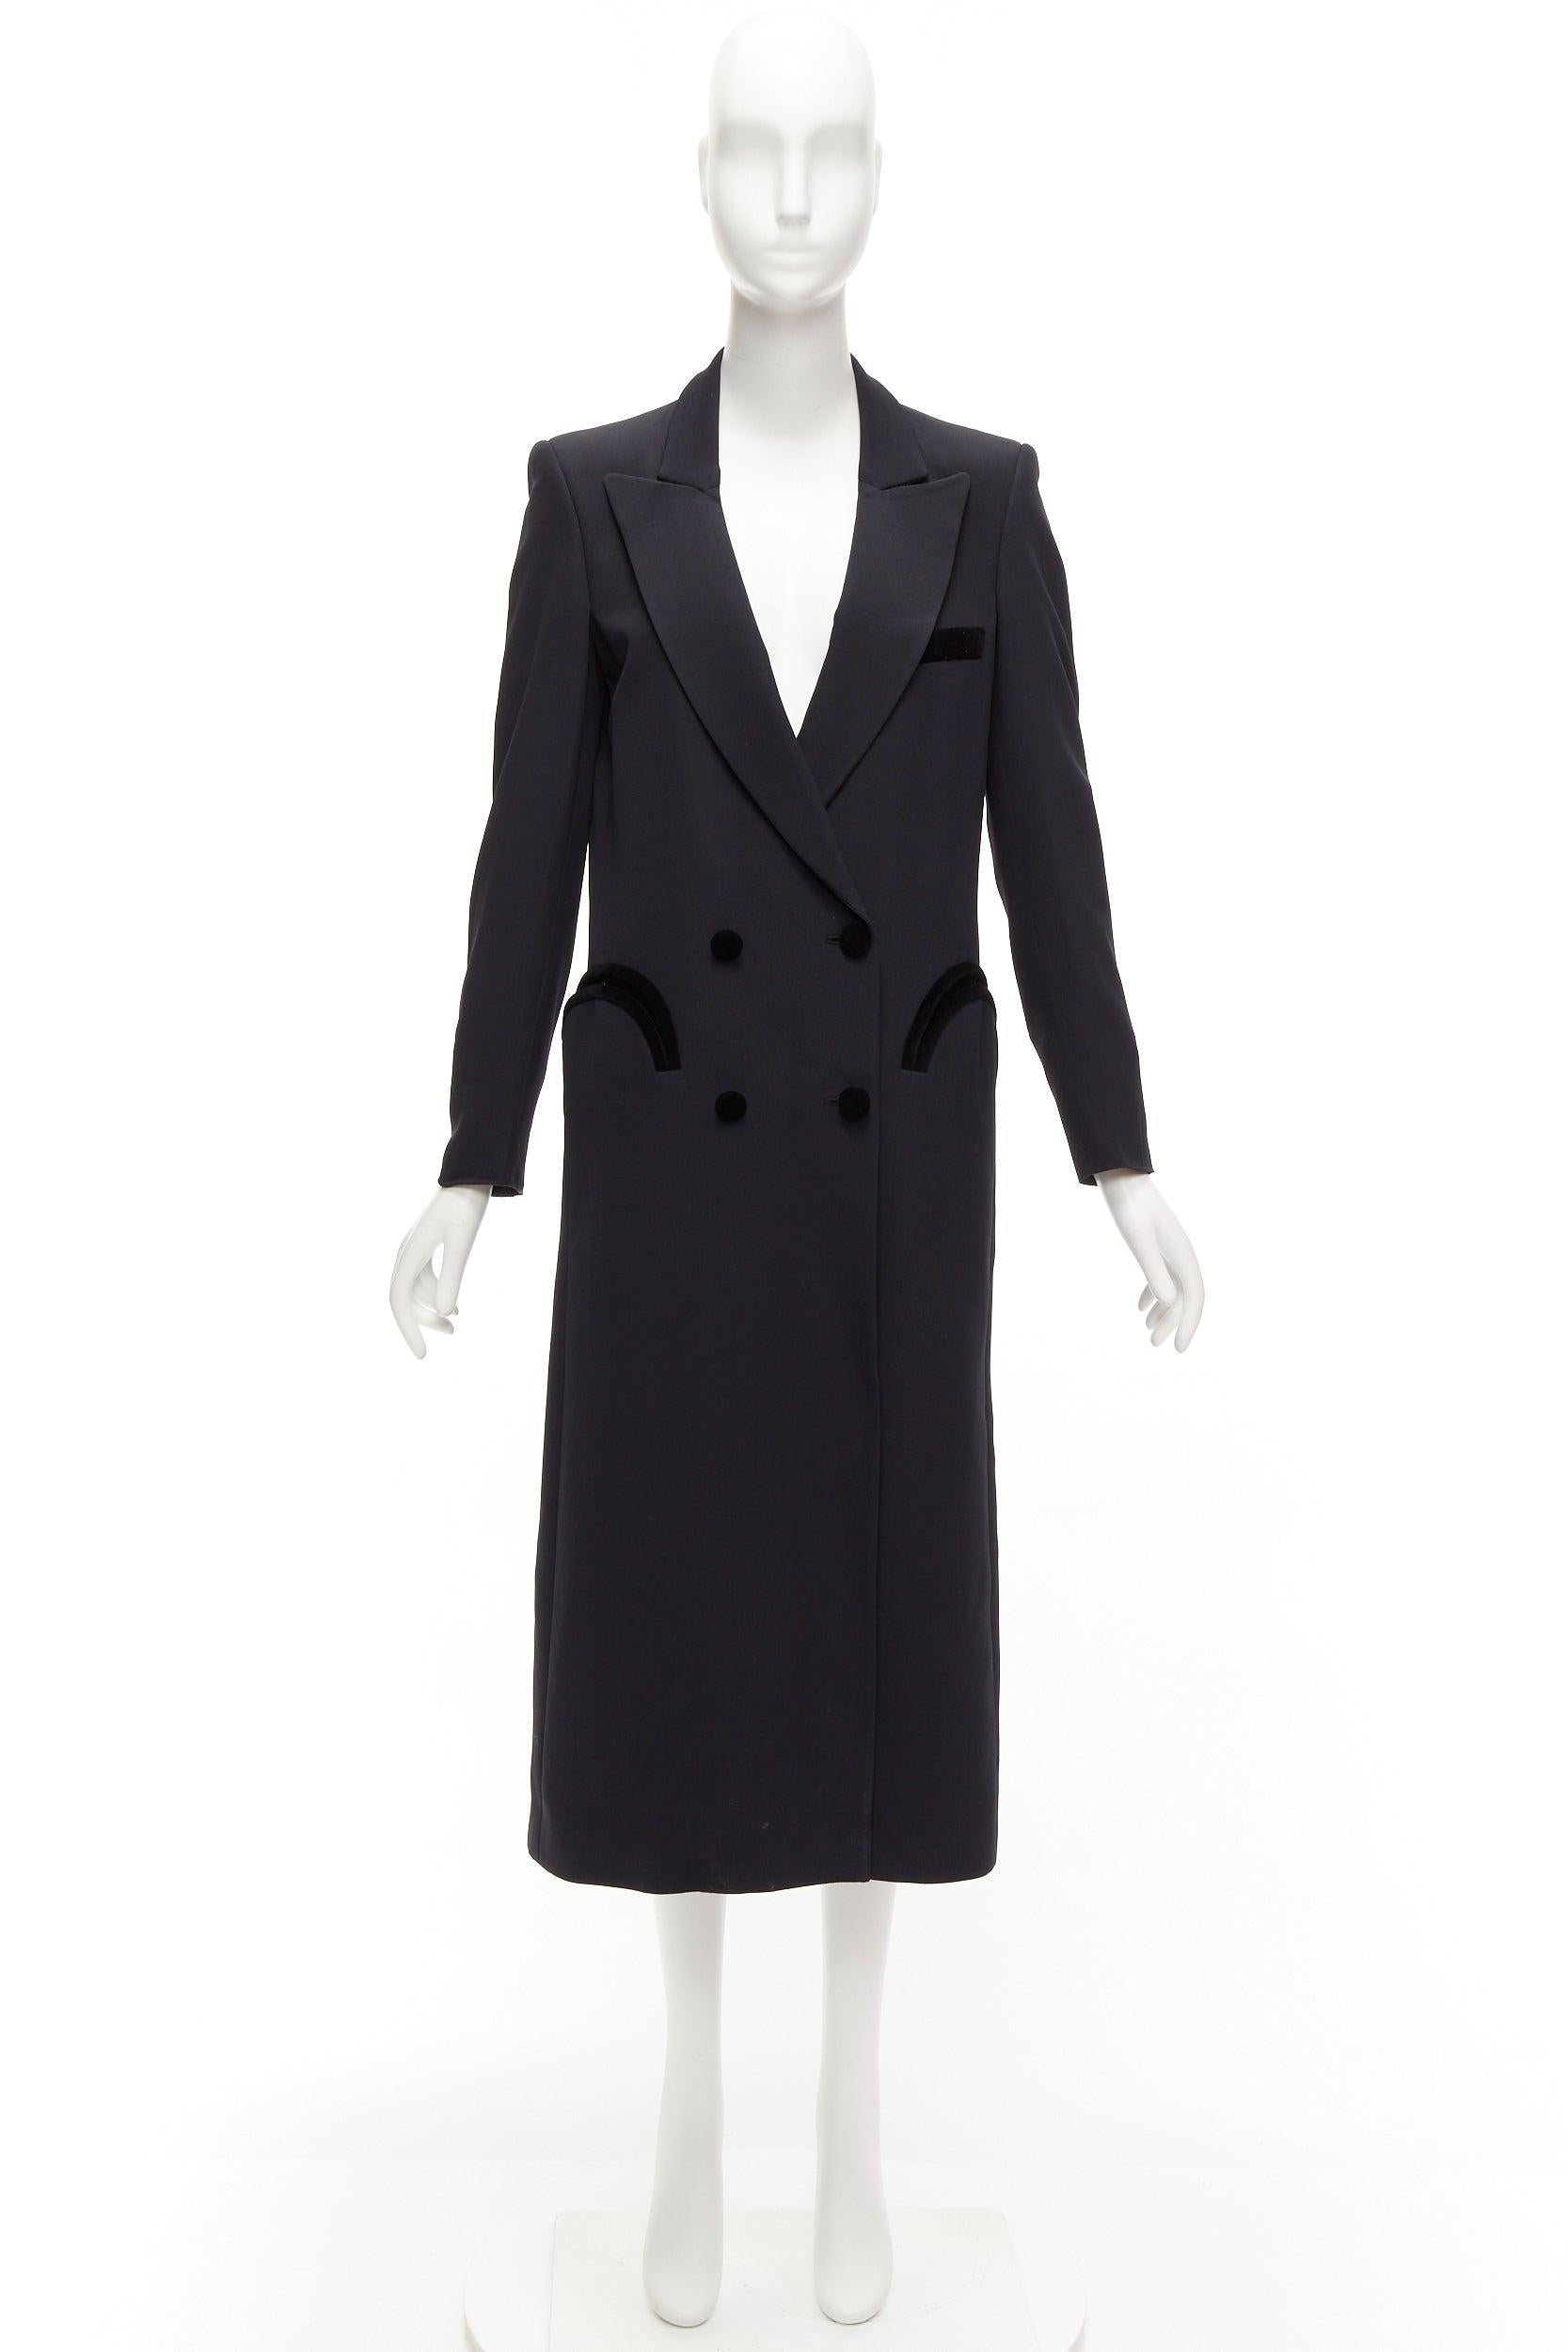 BLAZE MILANO Blazer Dress black curved pockets double breasted coat Sz.1 XS For Sale 6